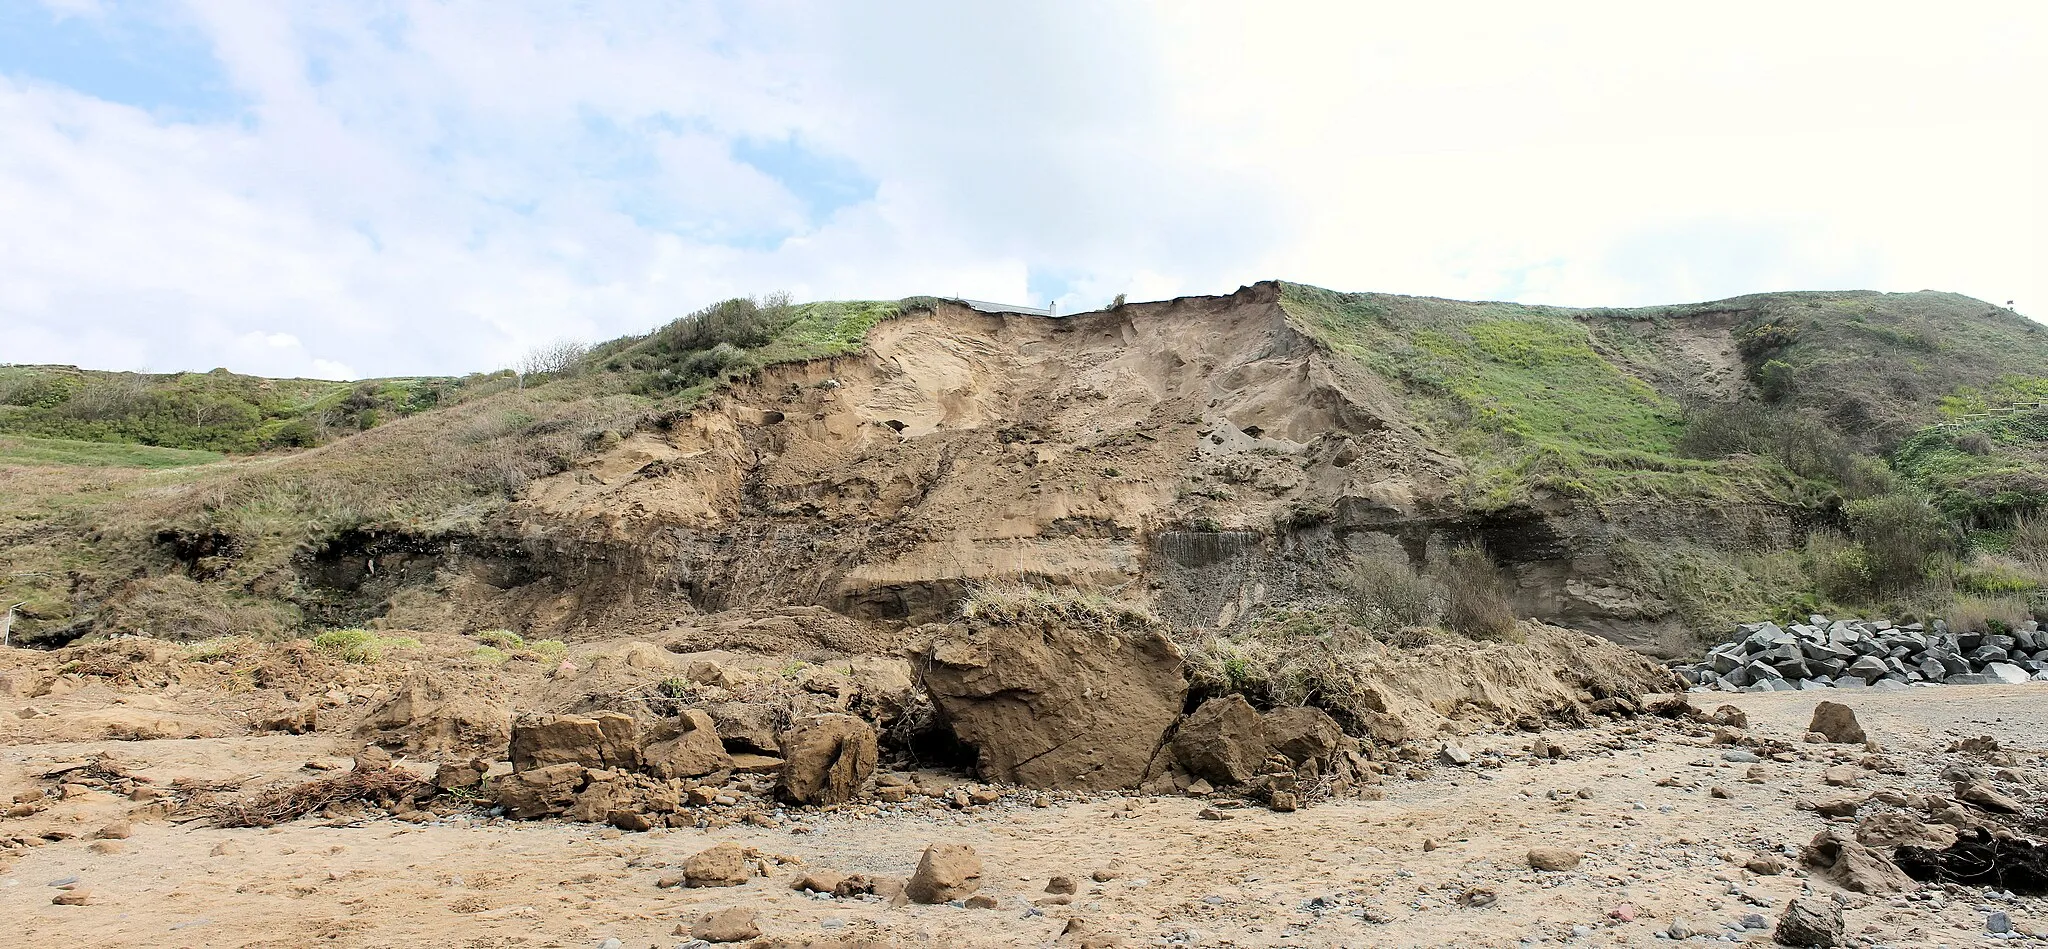 Photo showing: Nefyn marine landslide - coastal erosion as a result of Climate Change - Wales 19 April 2021.
Image taken 2nd May 2021.